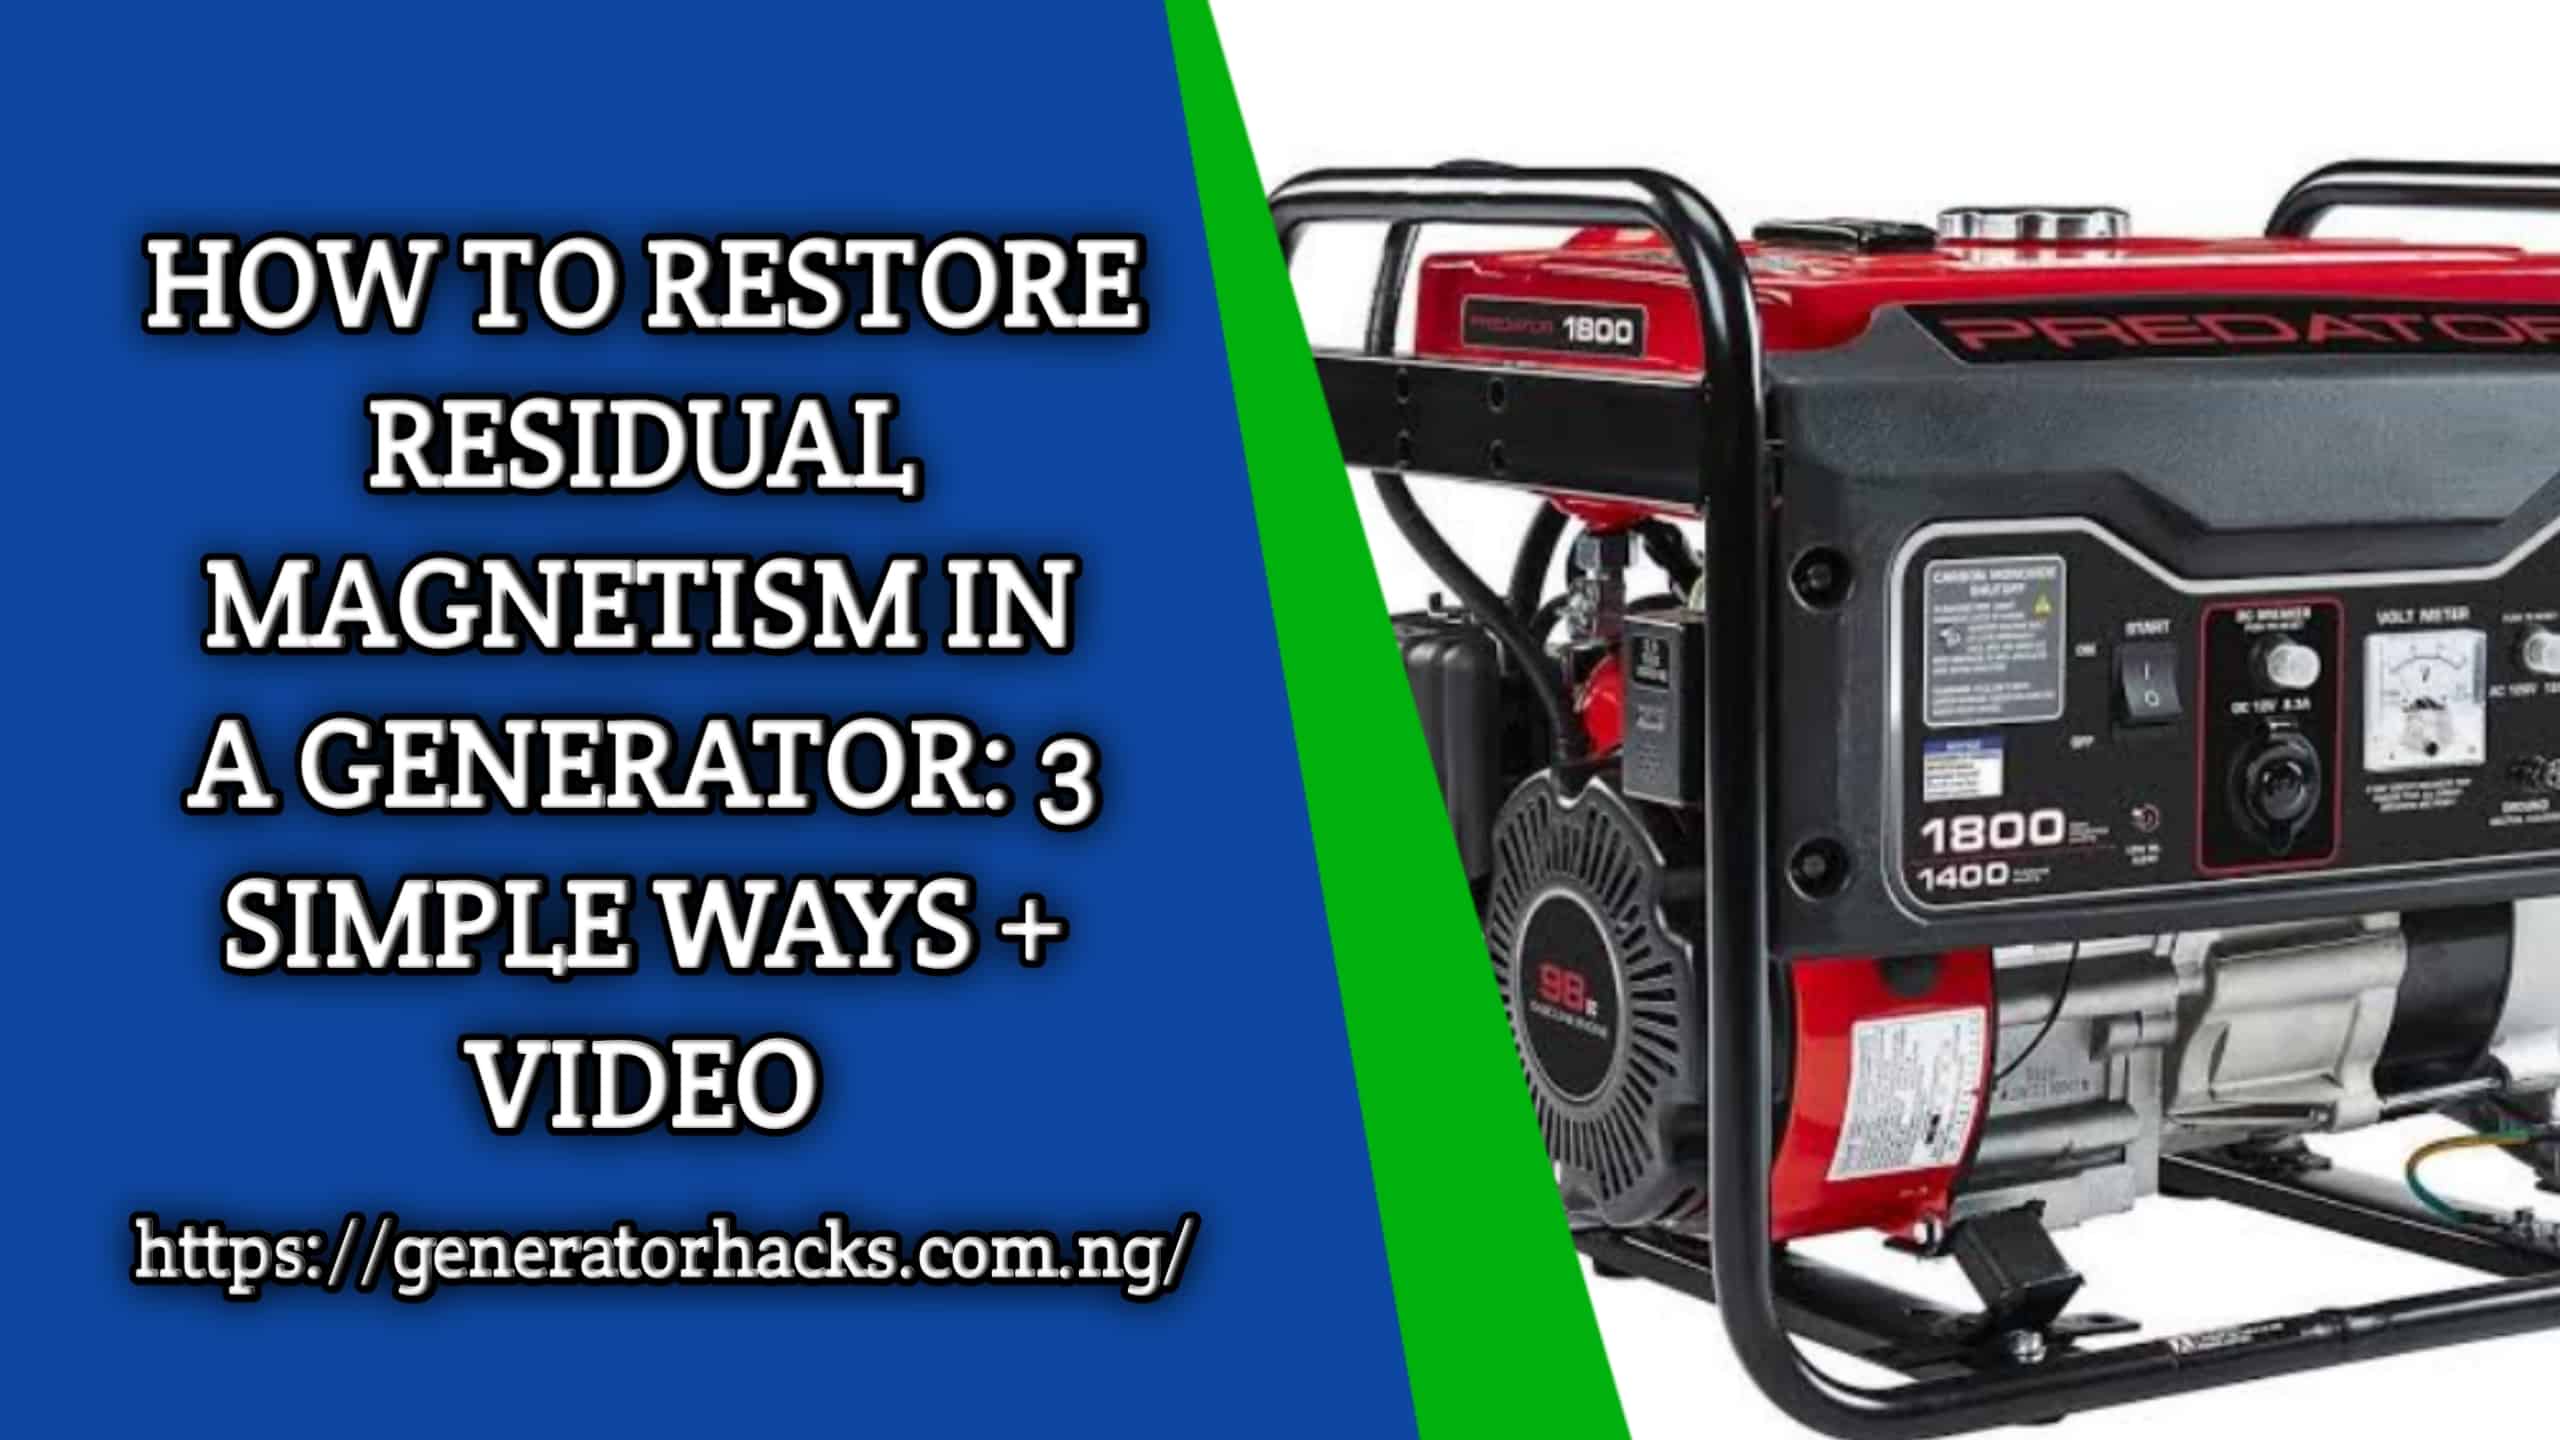 How to restore residual magnetism in generator, generator hacks,